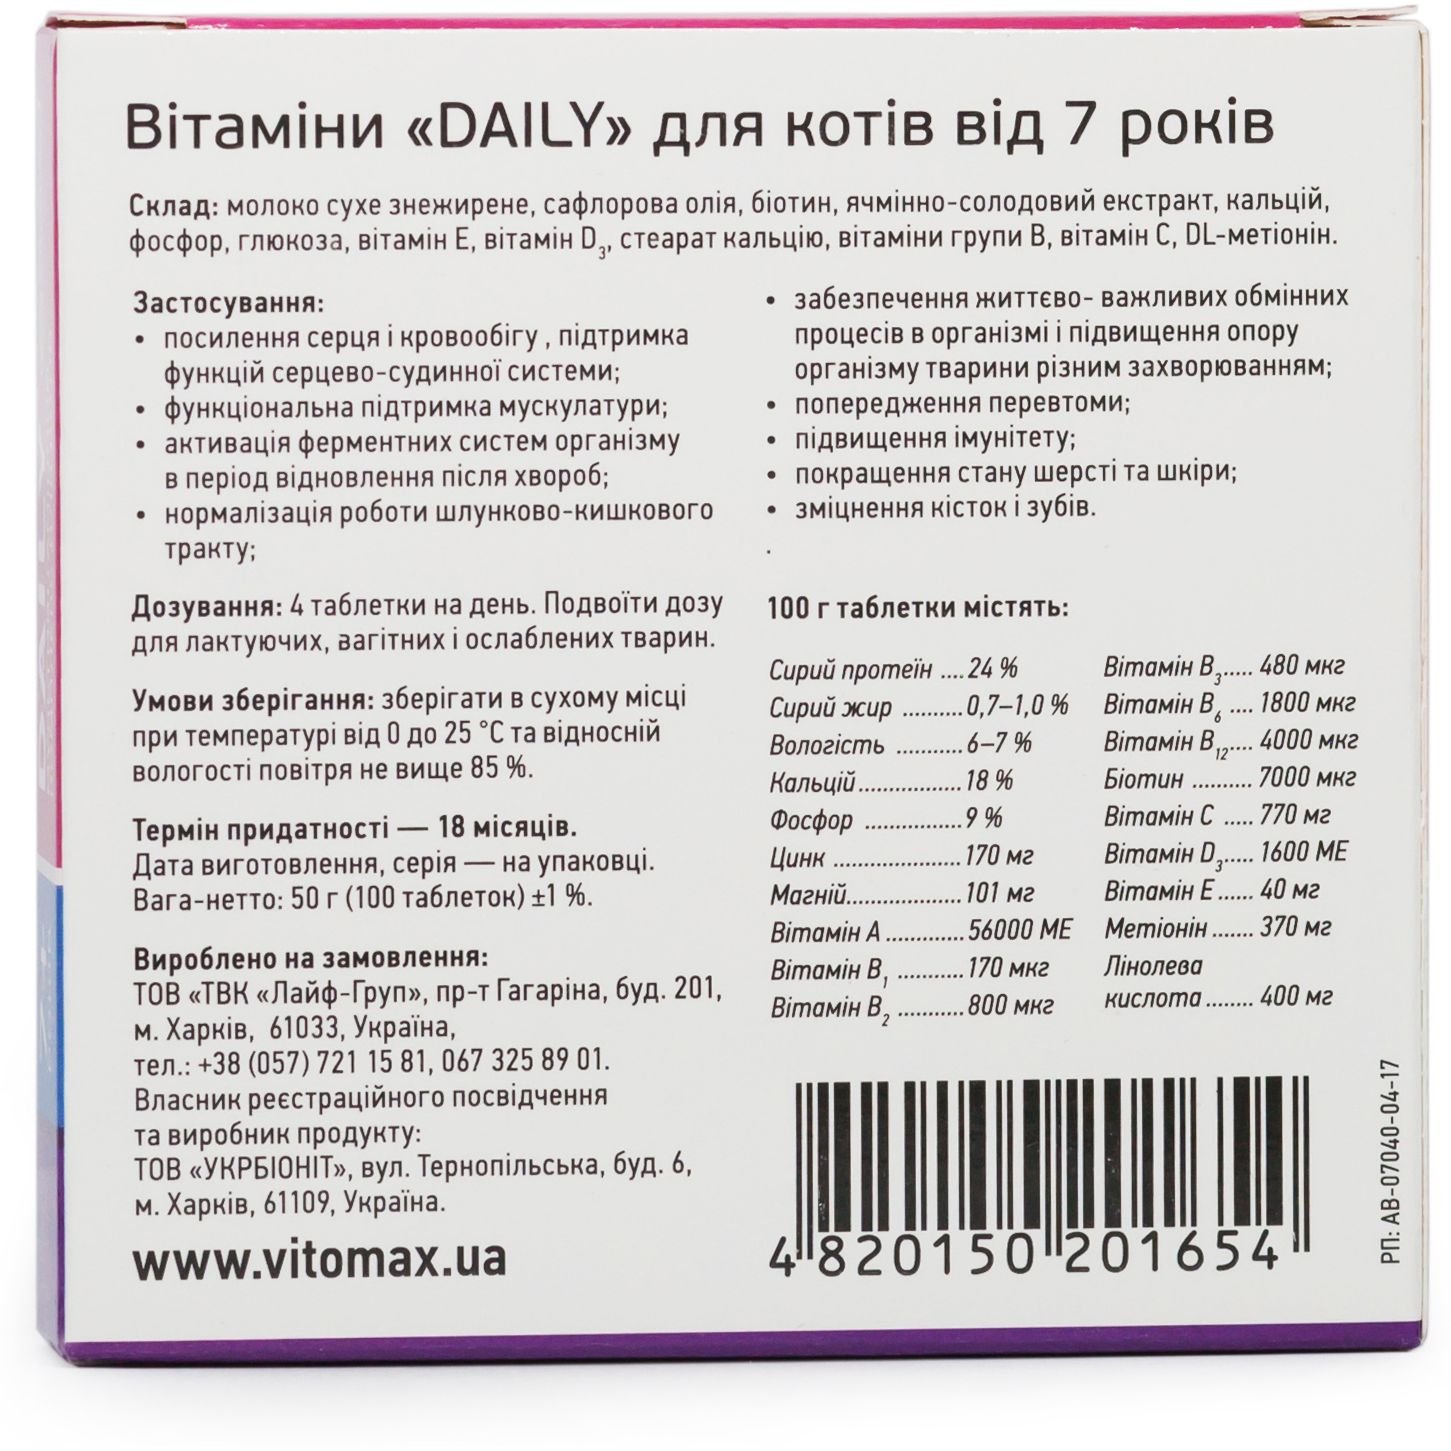 Мультивитаминный комплекс Vitomax Daily для кошек 7+ лет, 100 таблеток - фото 3